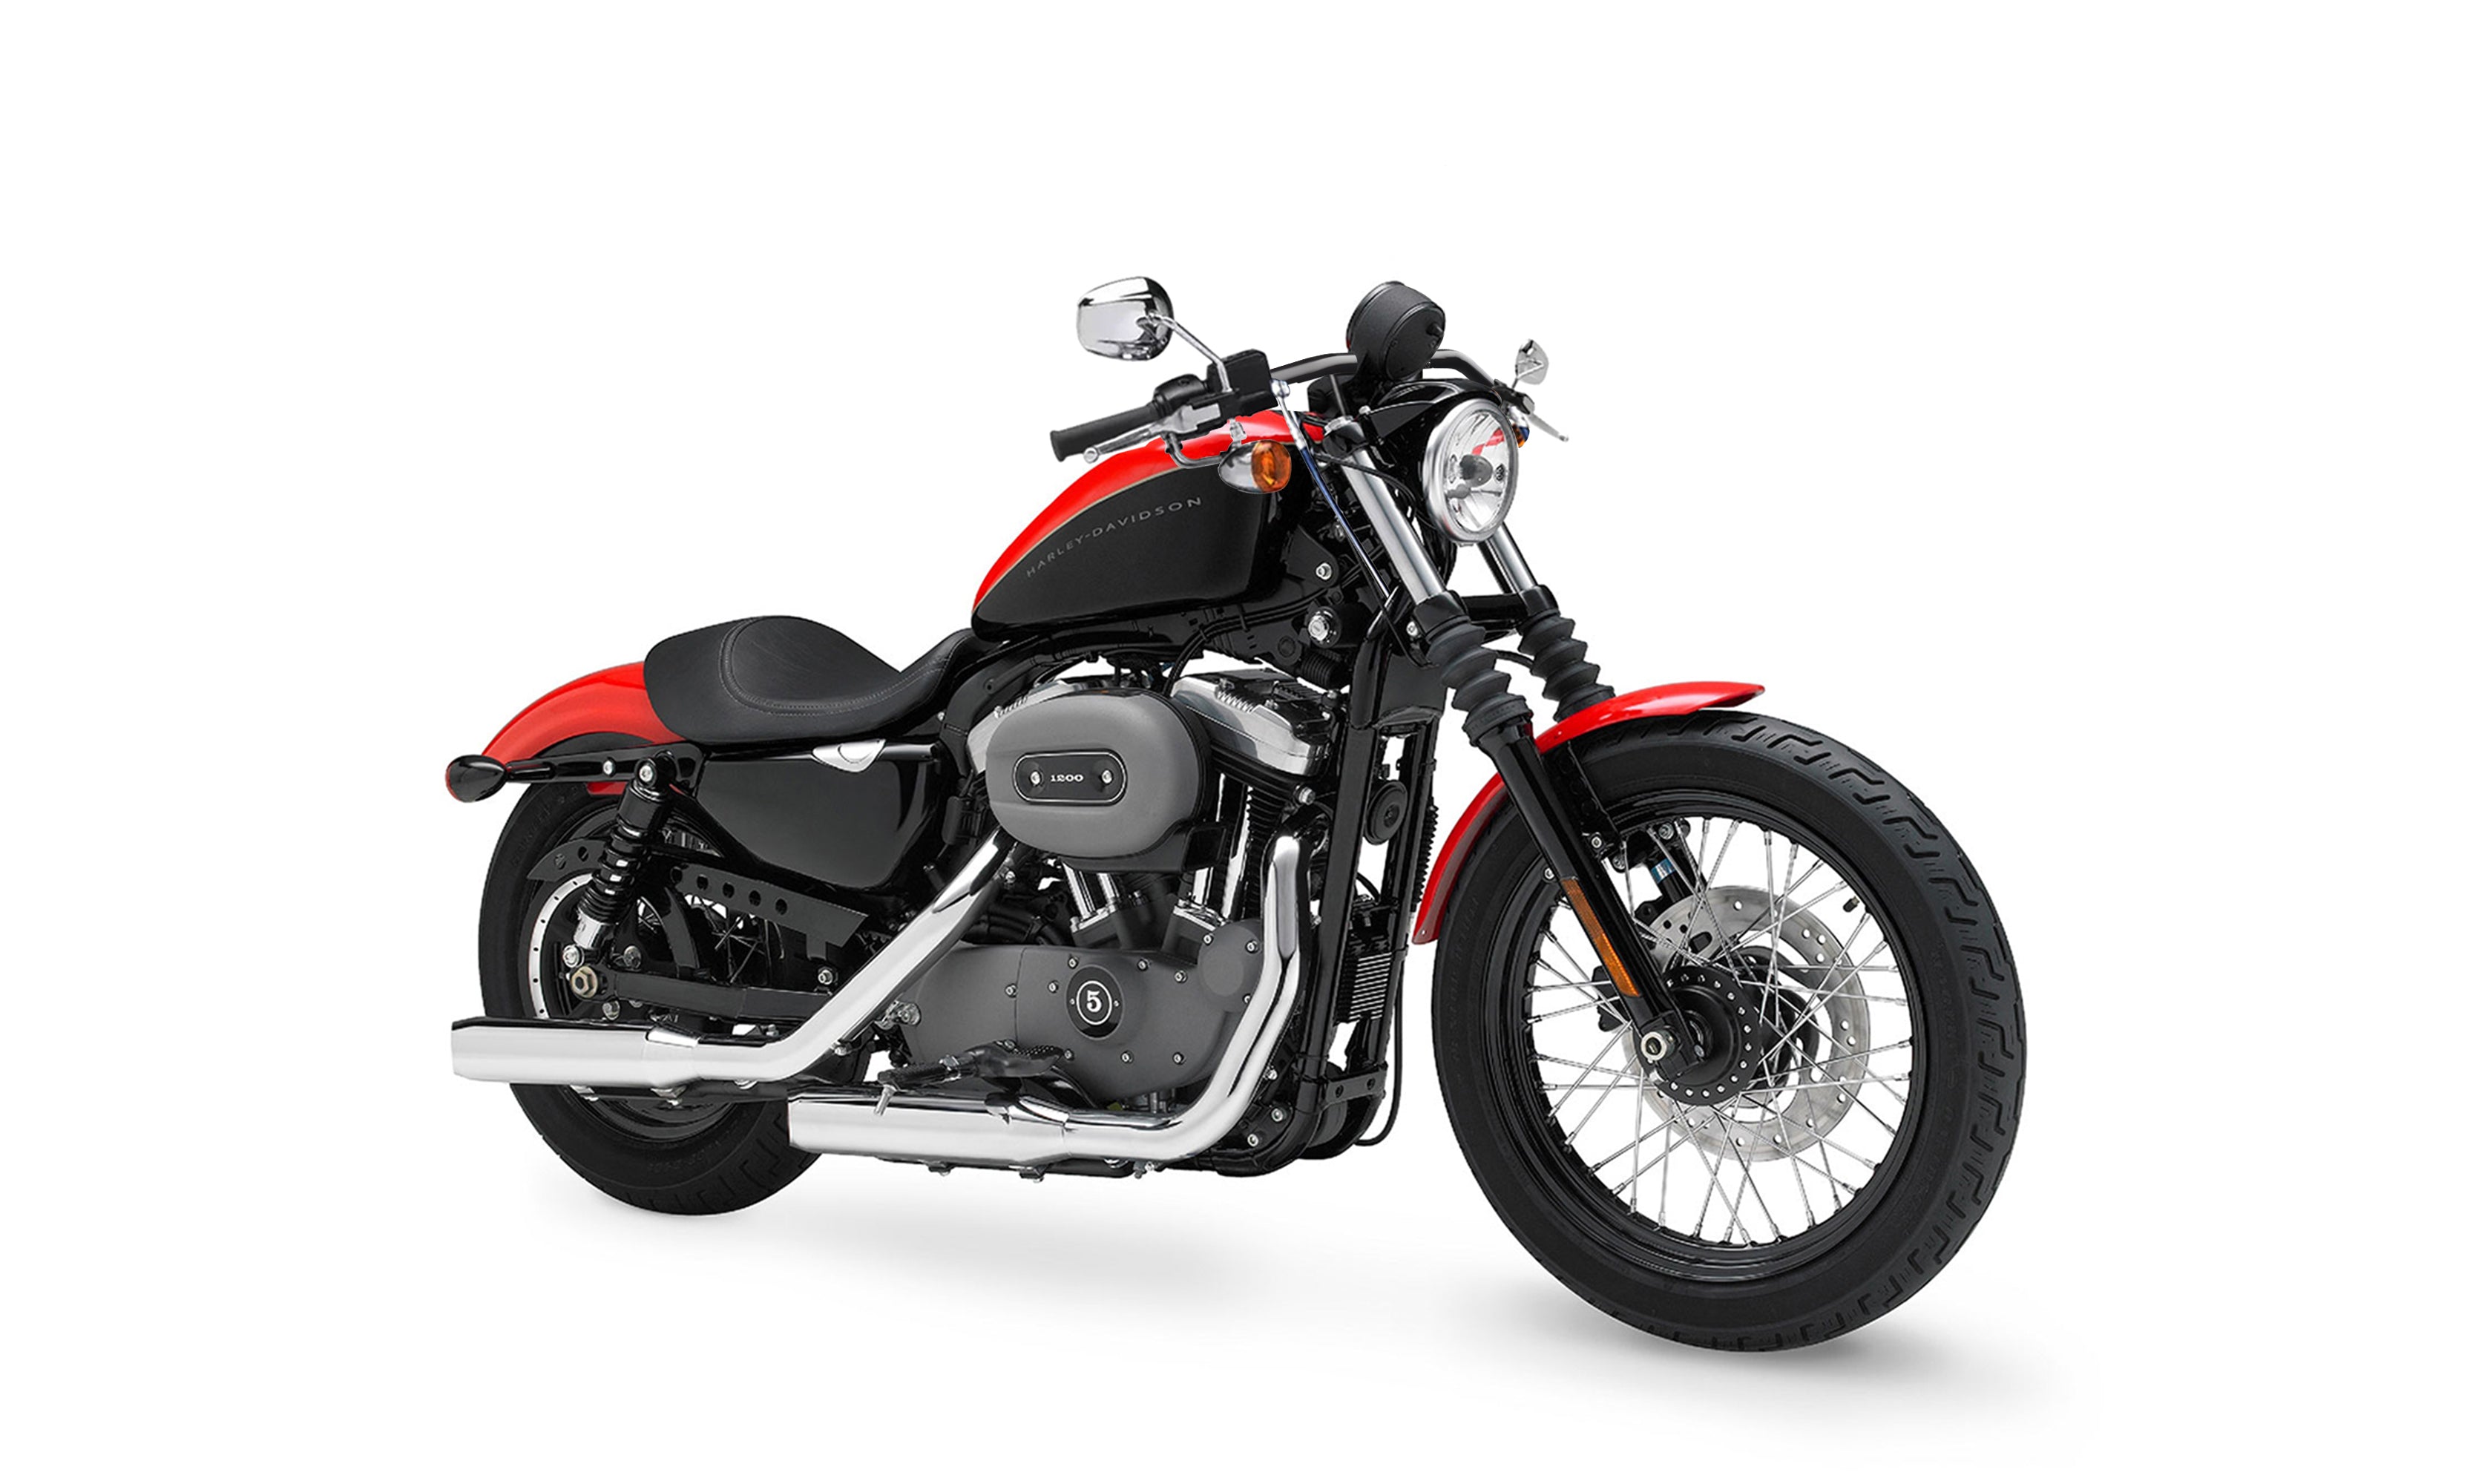 Viking Iron Born Drag Handlebar For Harley Sportster 1200 Nightster XL1200N Gloss Black Bag on Bike View @expand